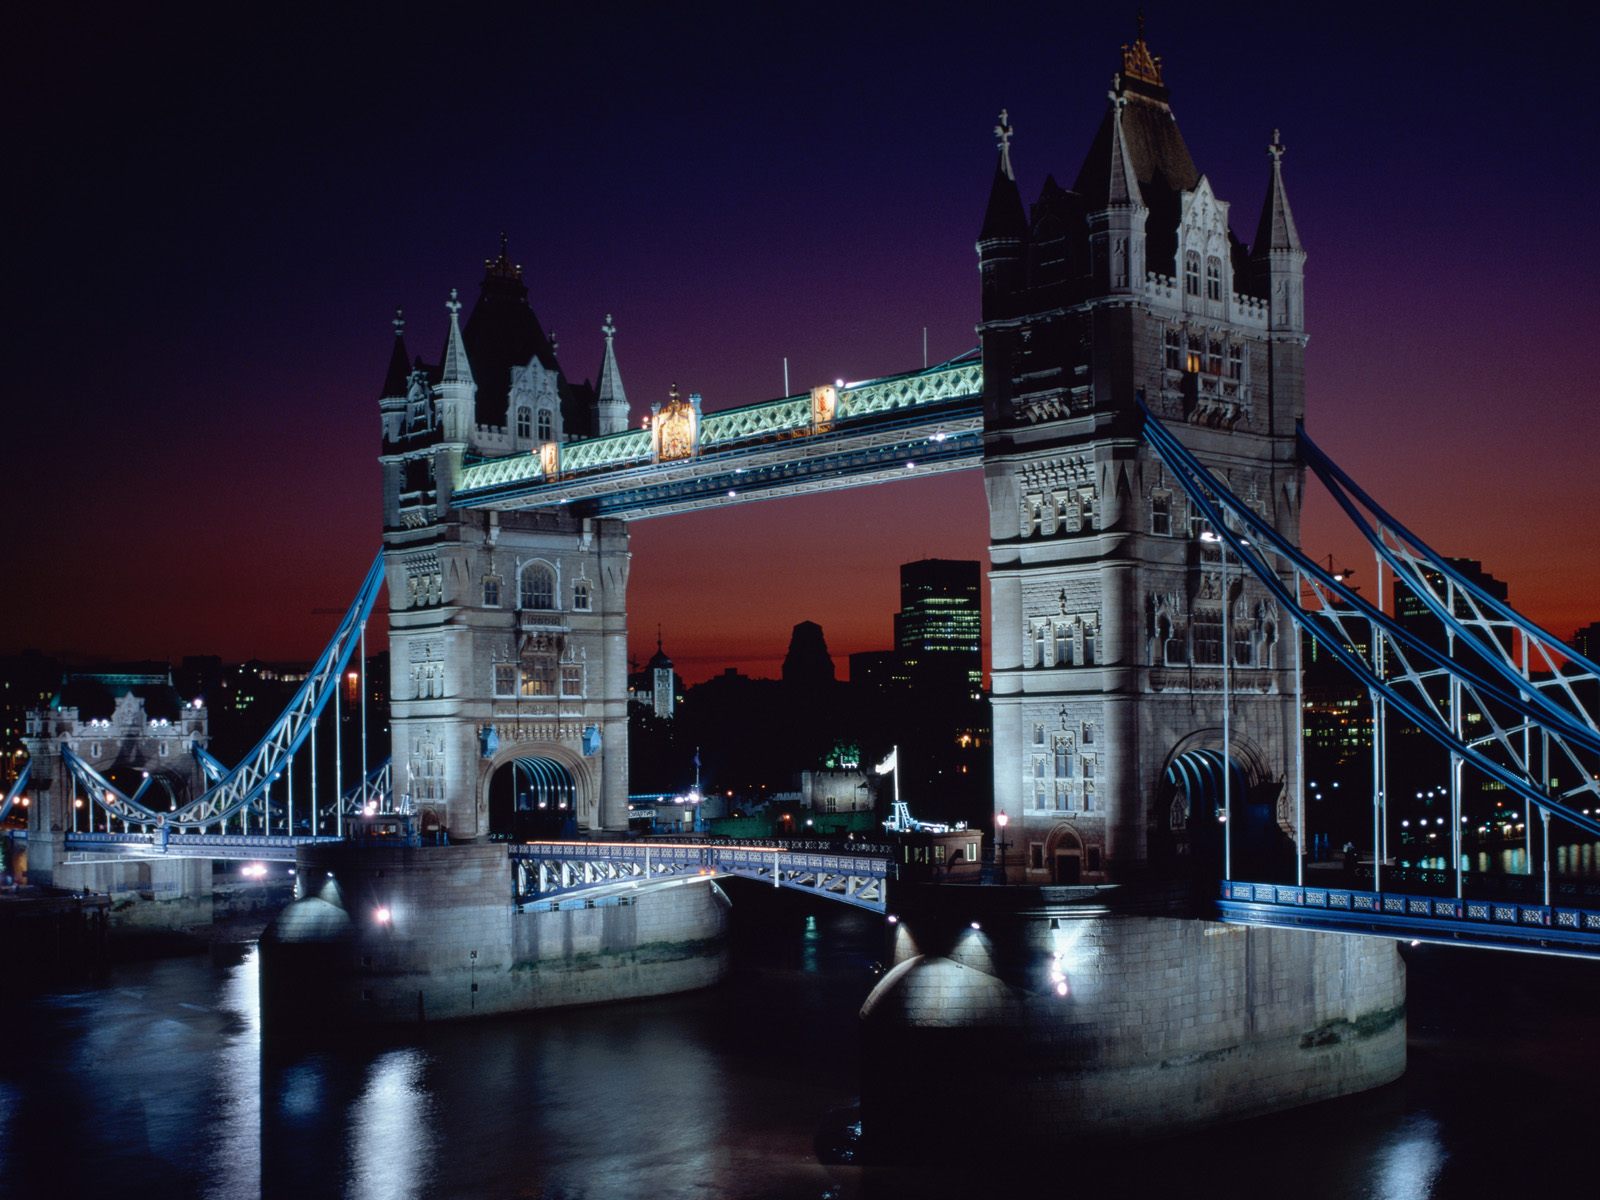 Tower Bridge Wallpaper HD